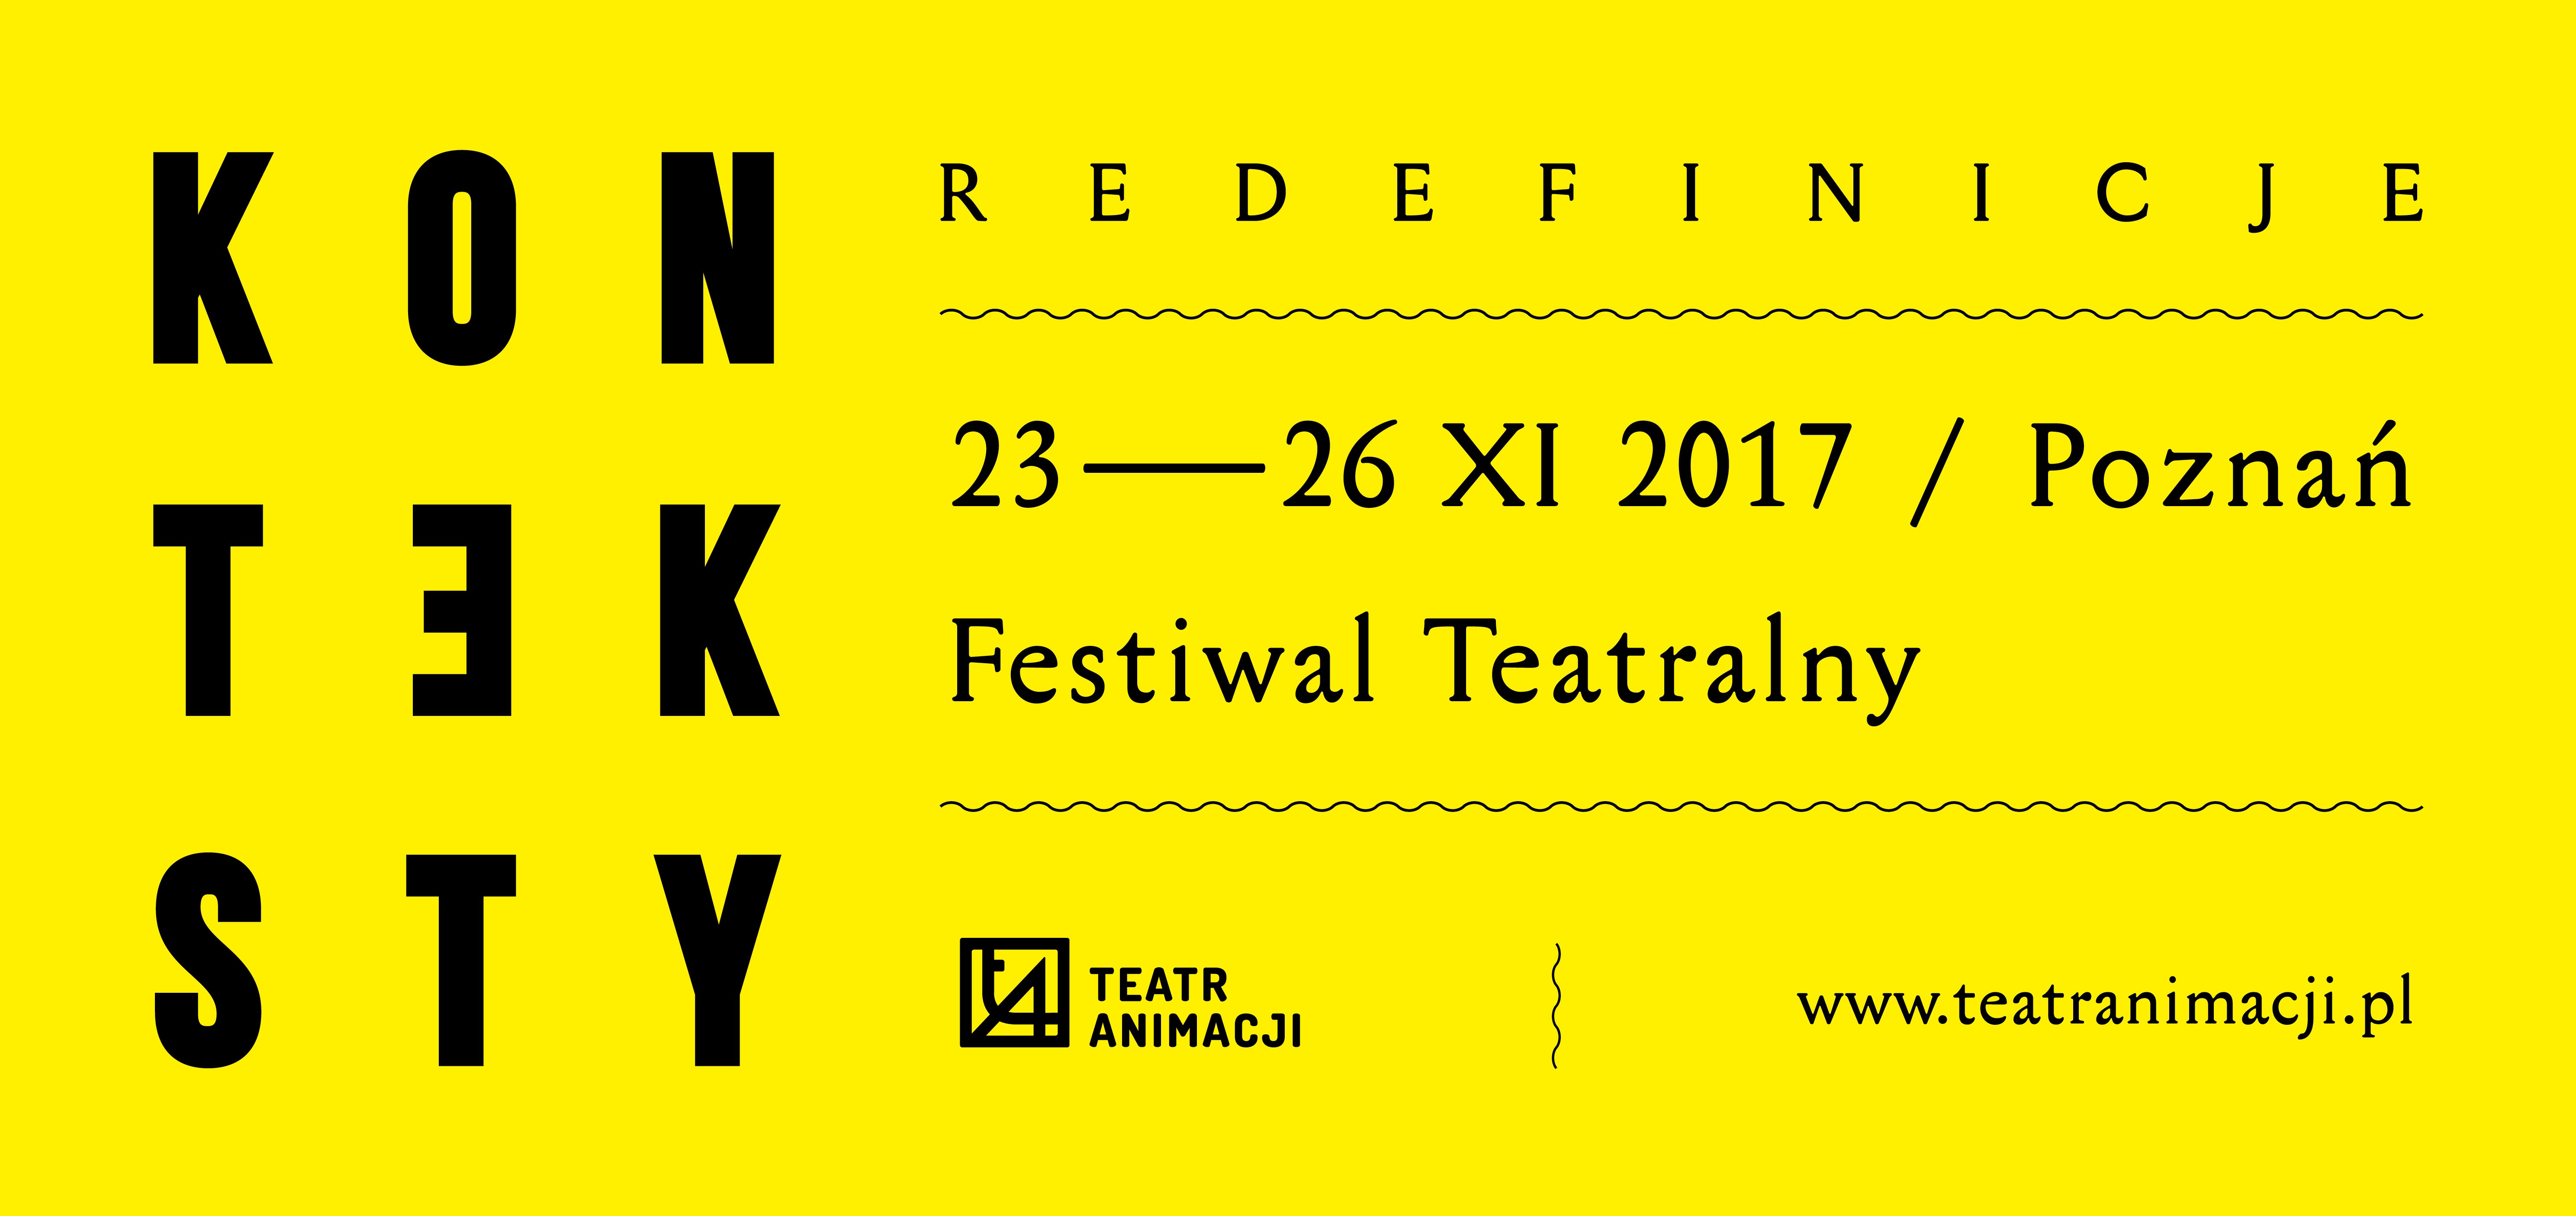 Festiwal Teatralny Konteksty Redefinicje